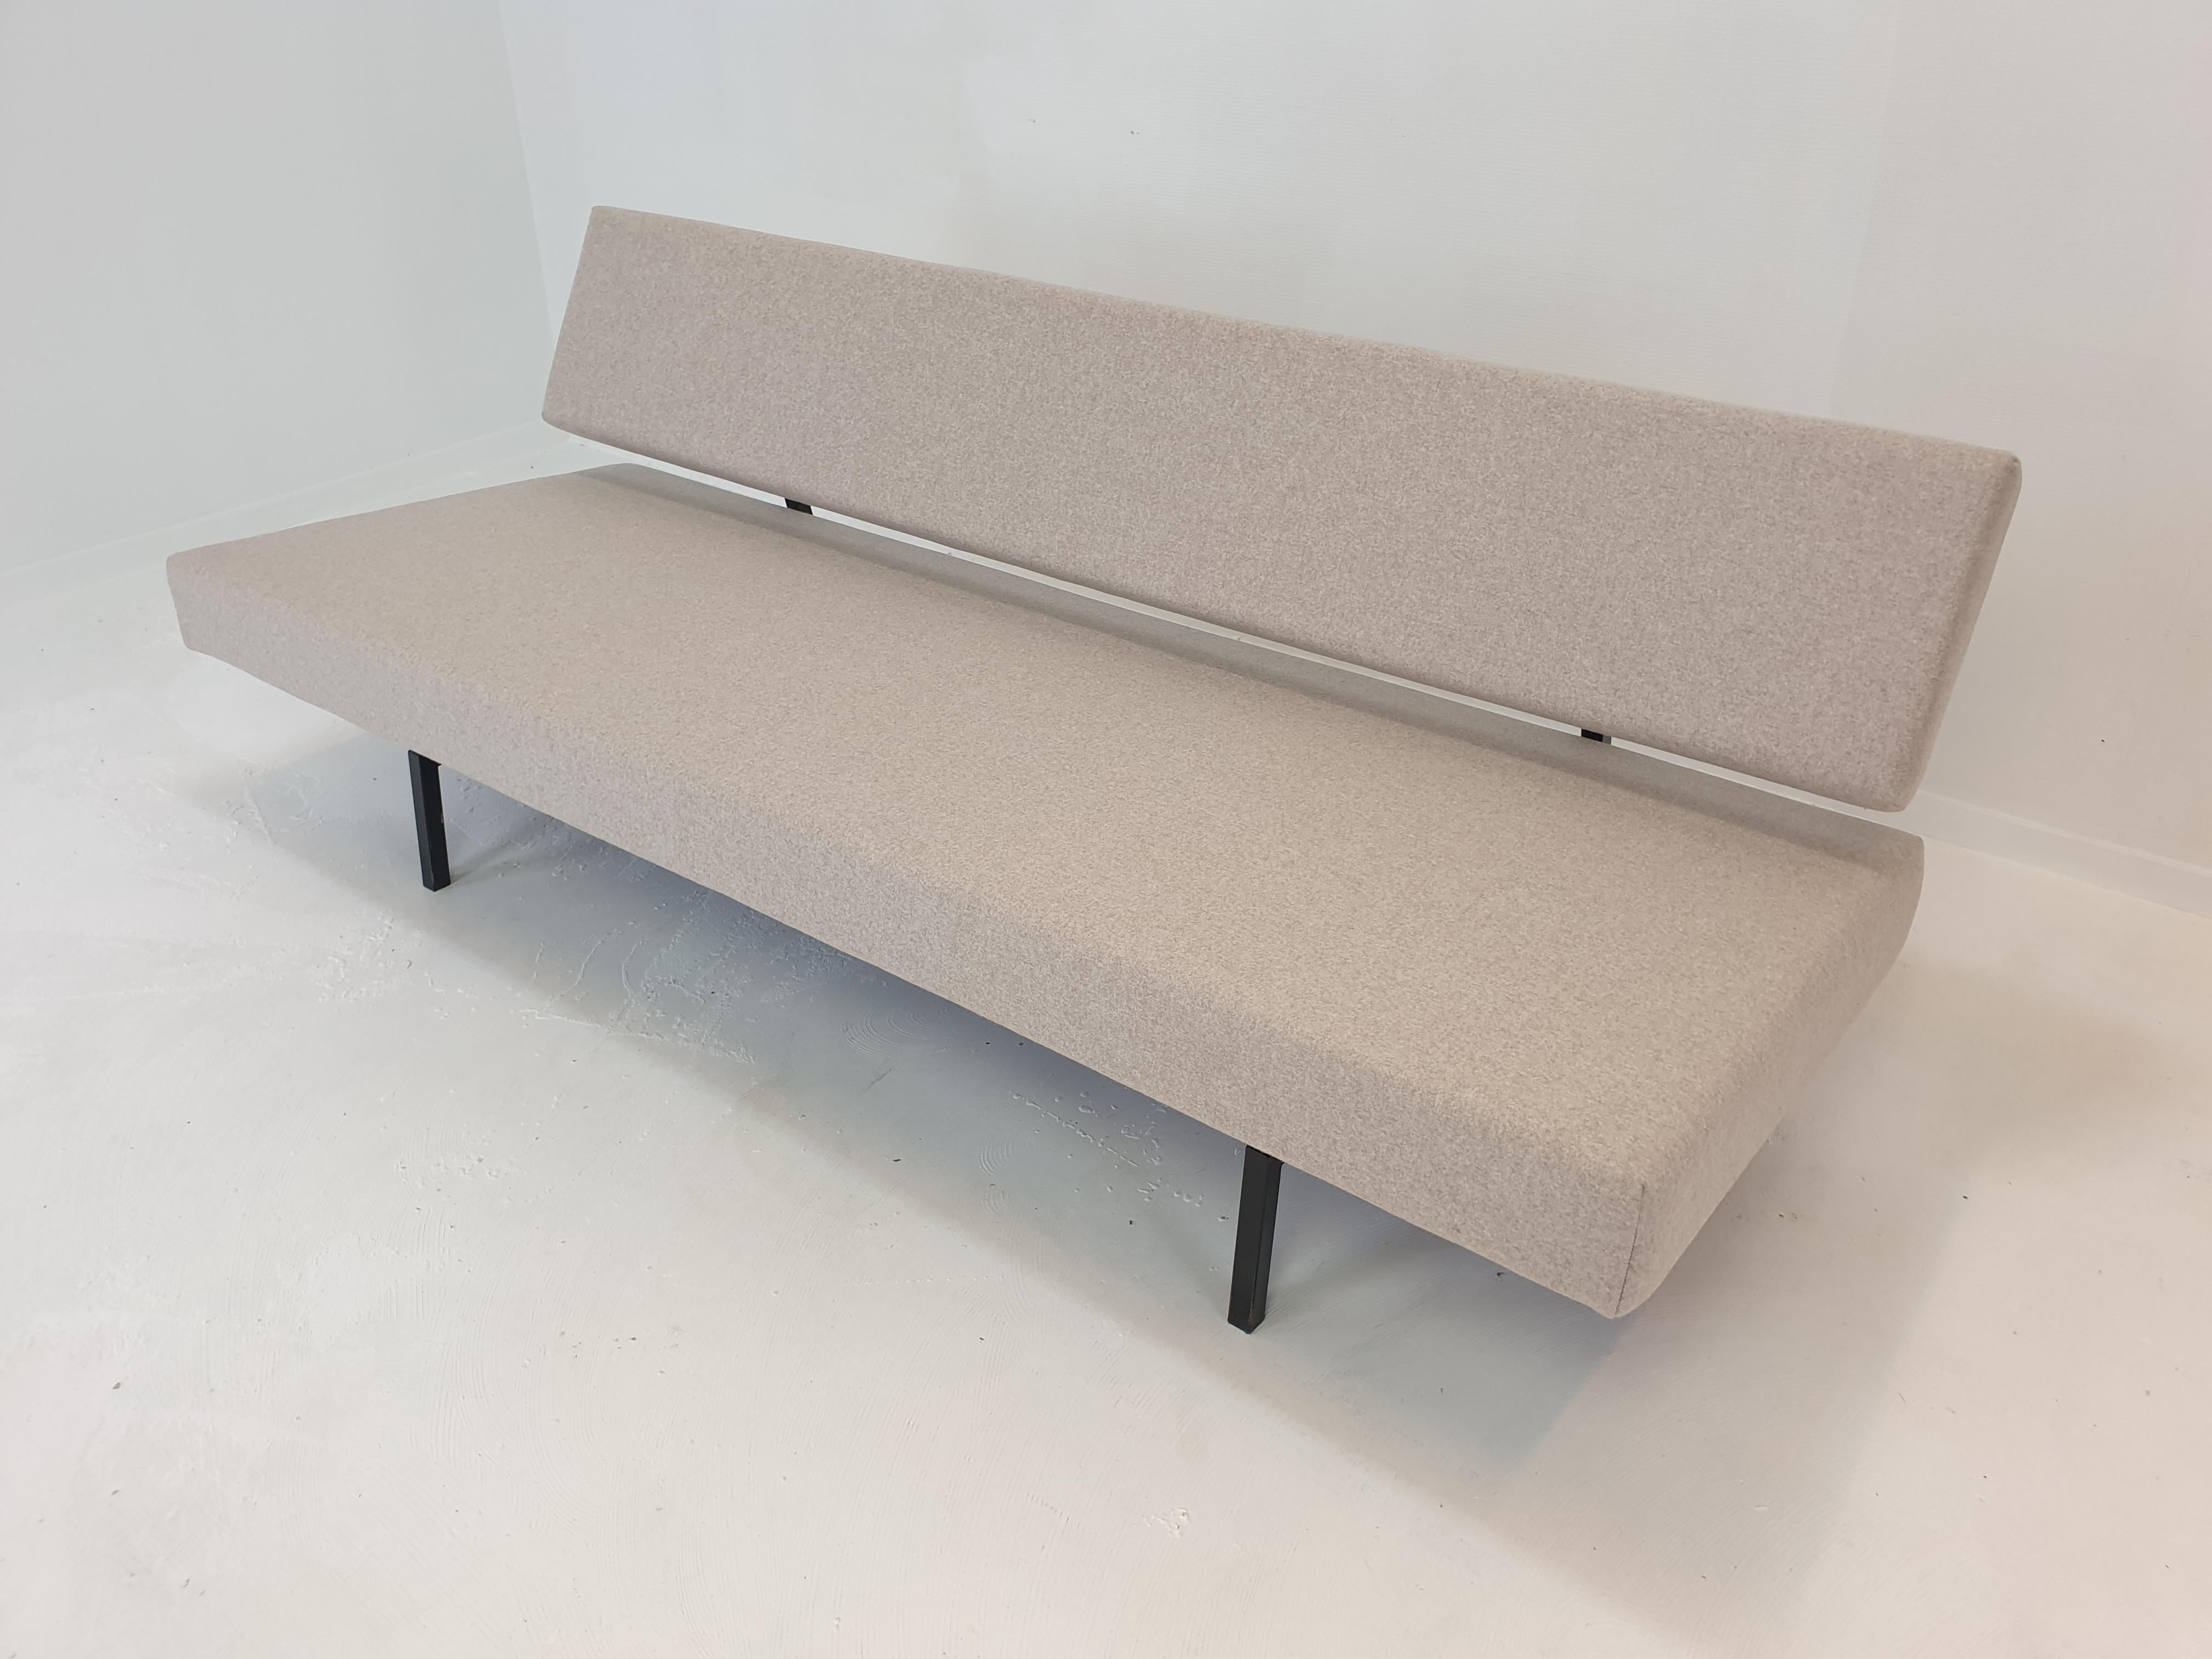 Stainless Steel Mid Century Sleeping Sofa by Martin Visser for 't Spectrum, 1960s For Sale